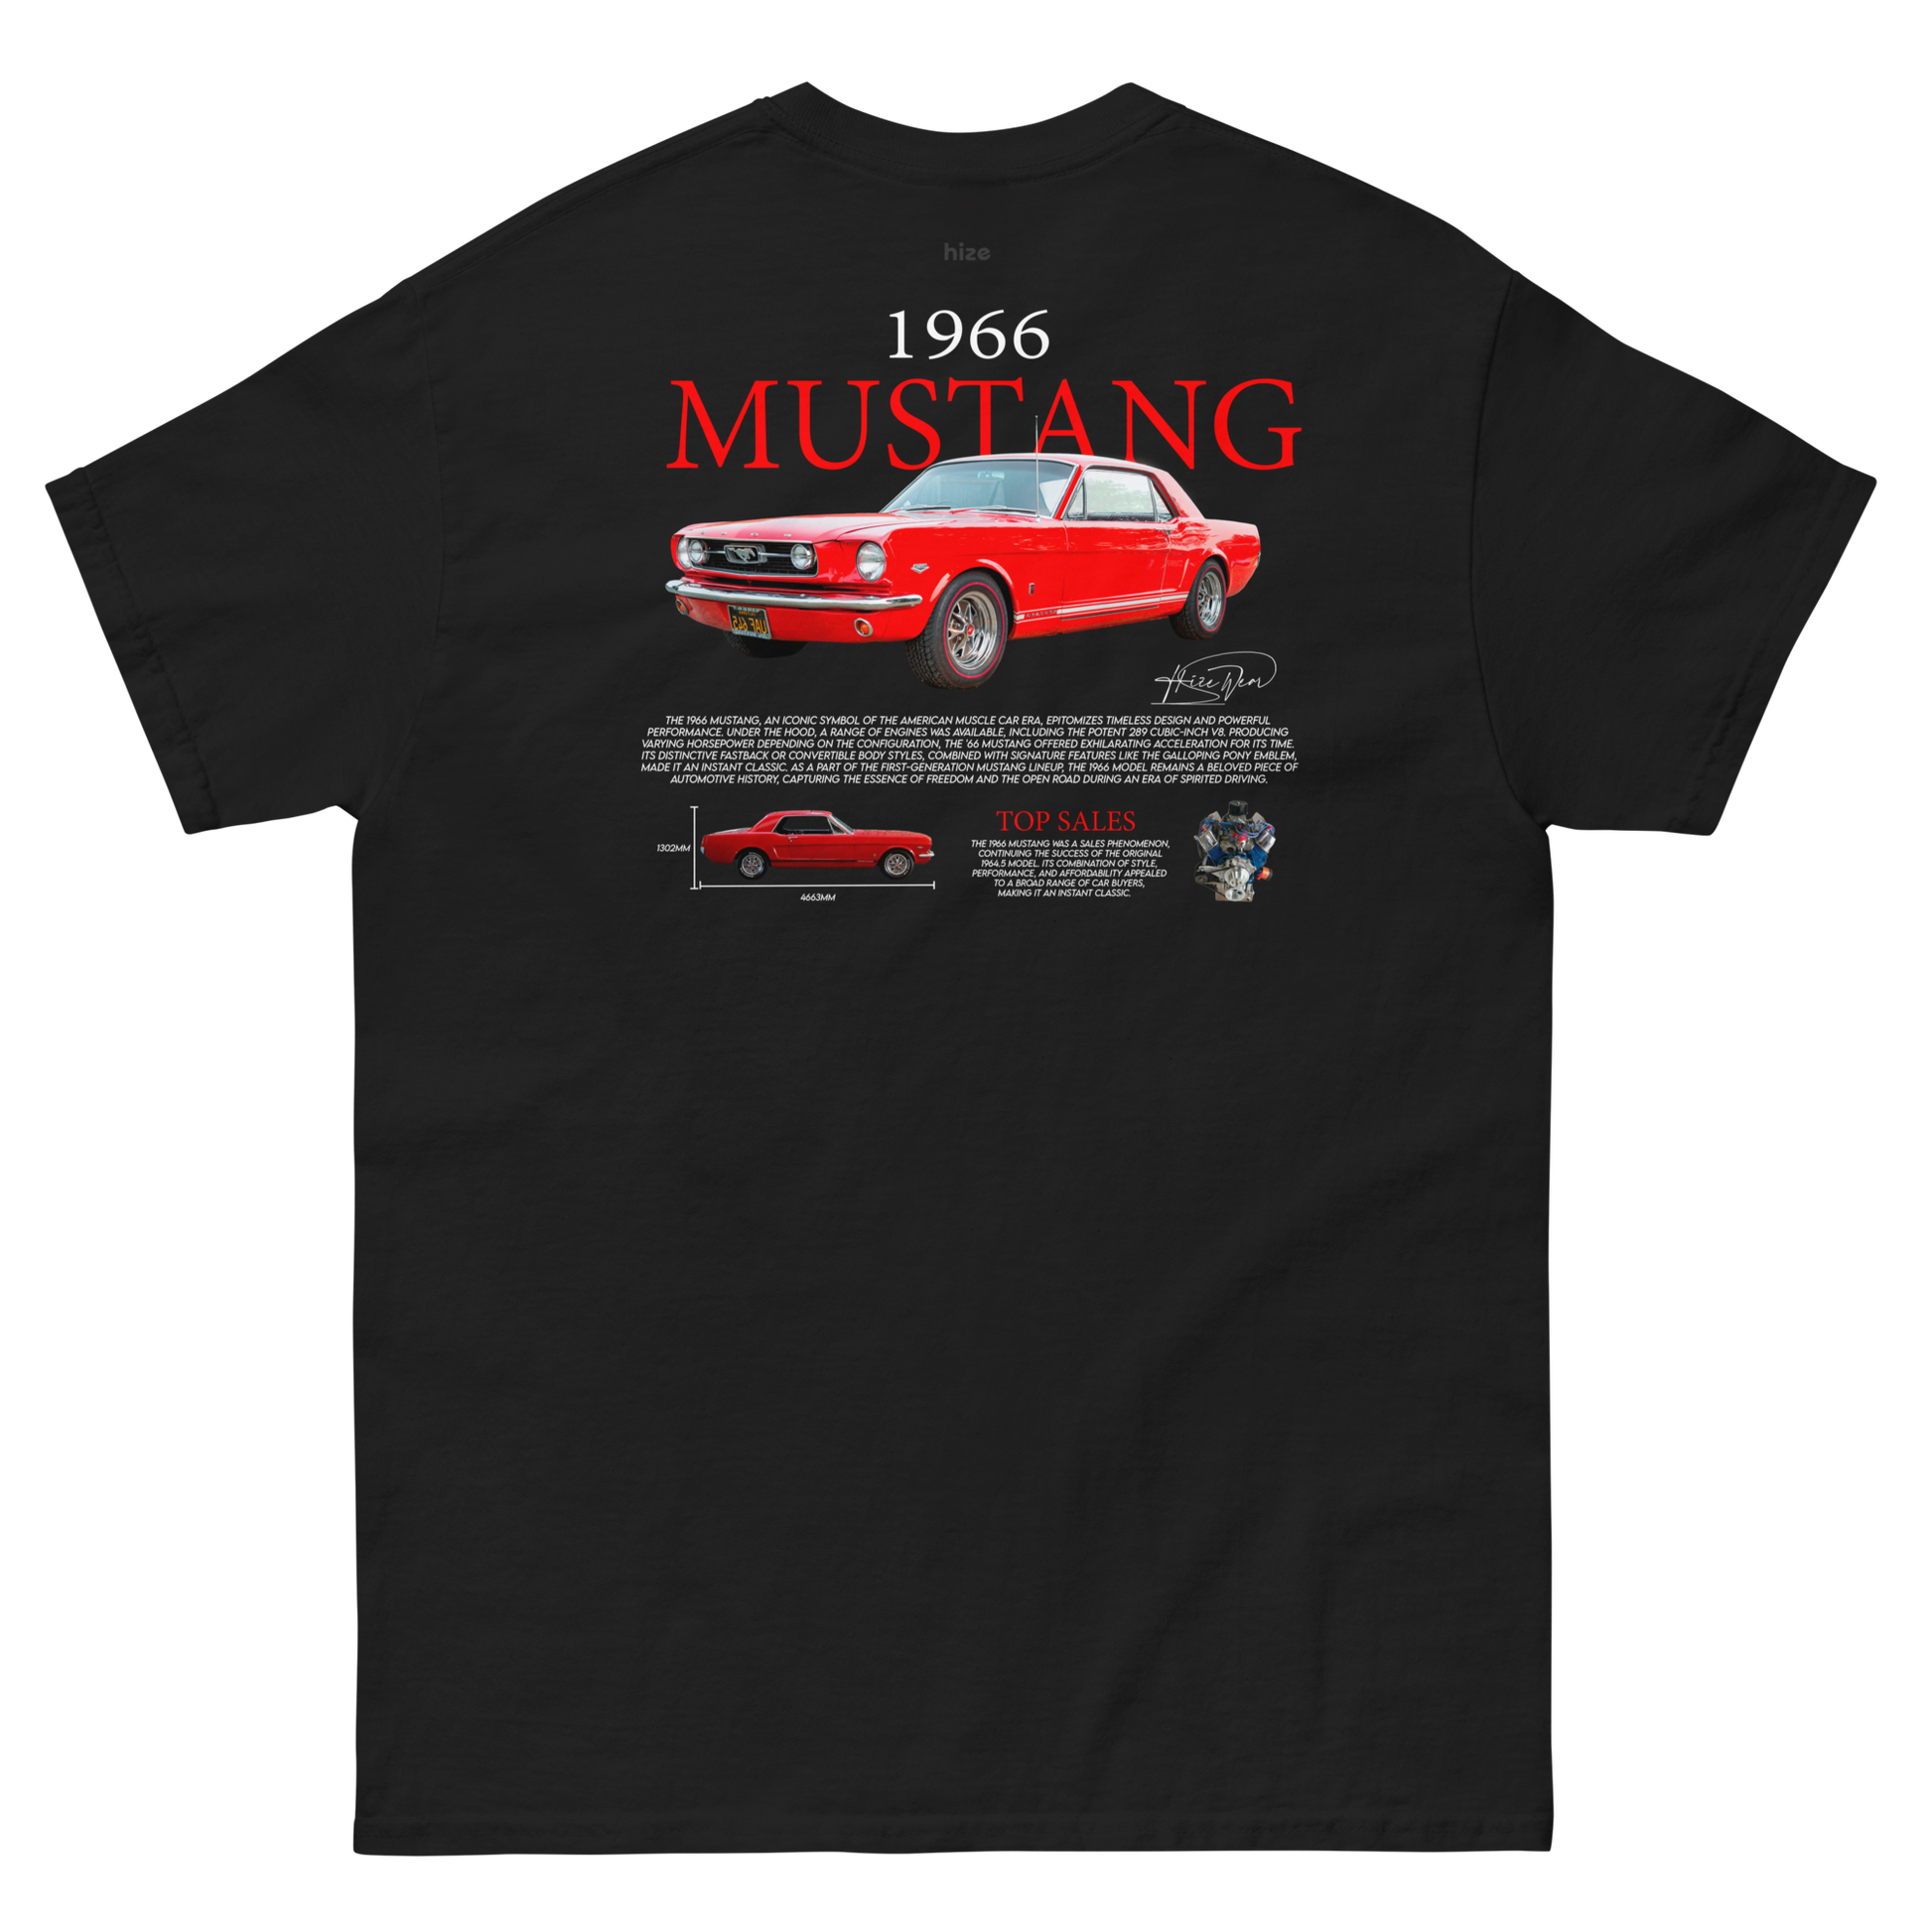 Ford Mustang Coupé 289 T-shirt - Black Back View